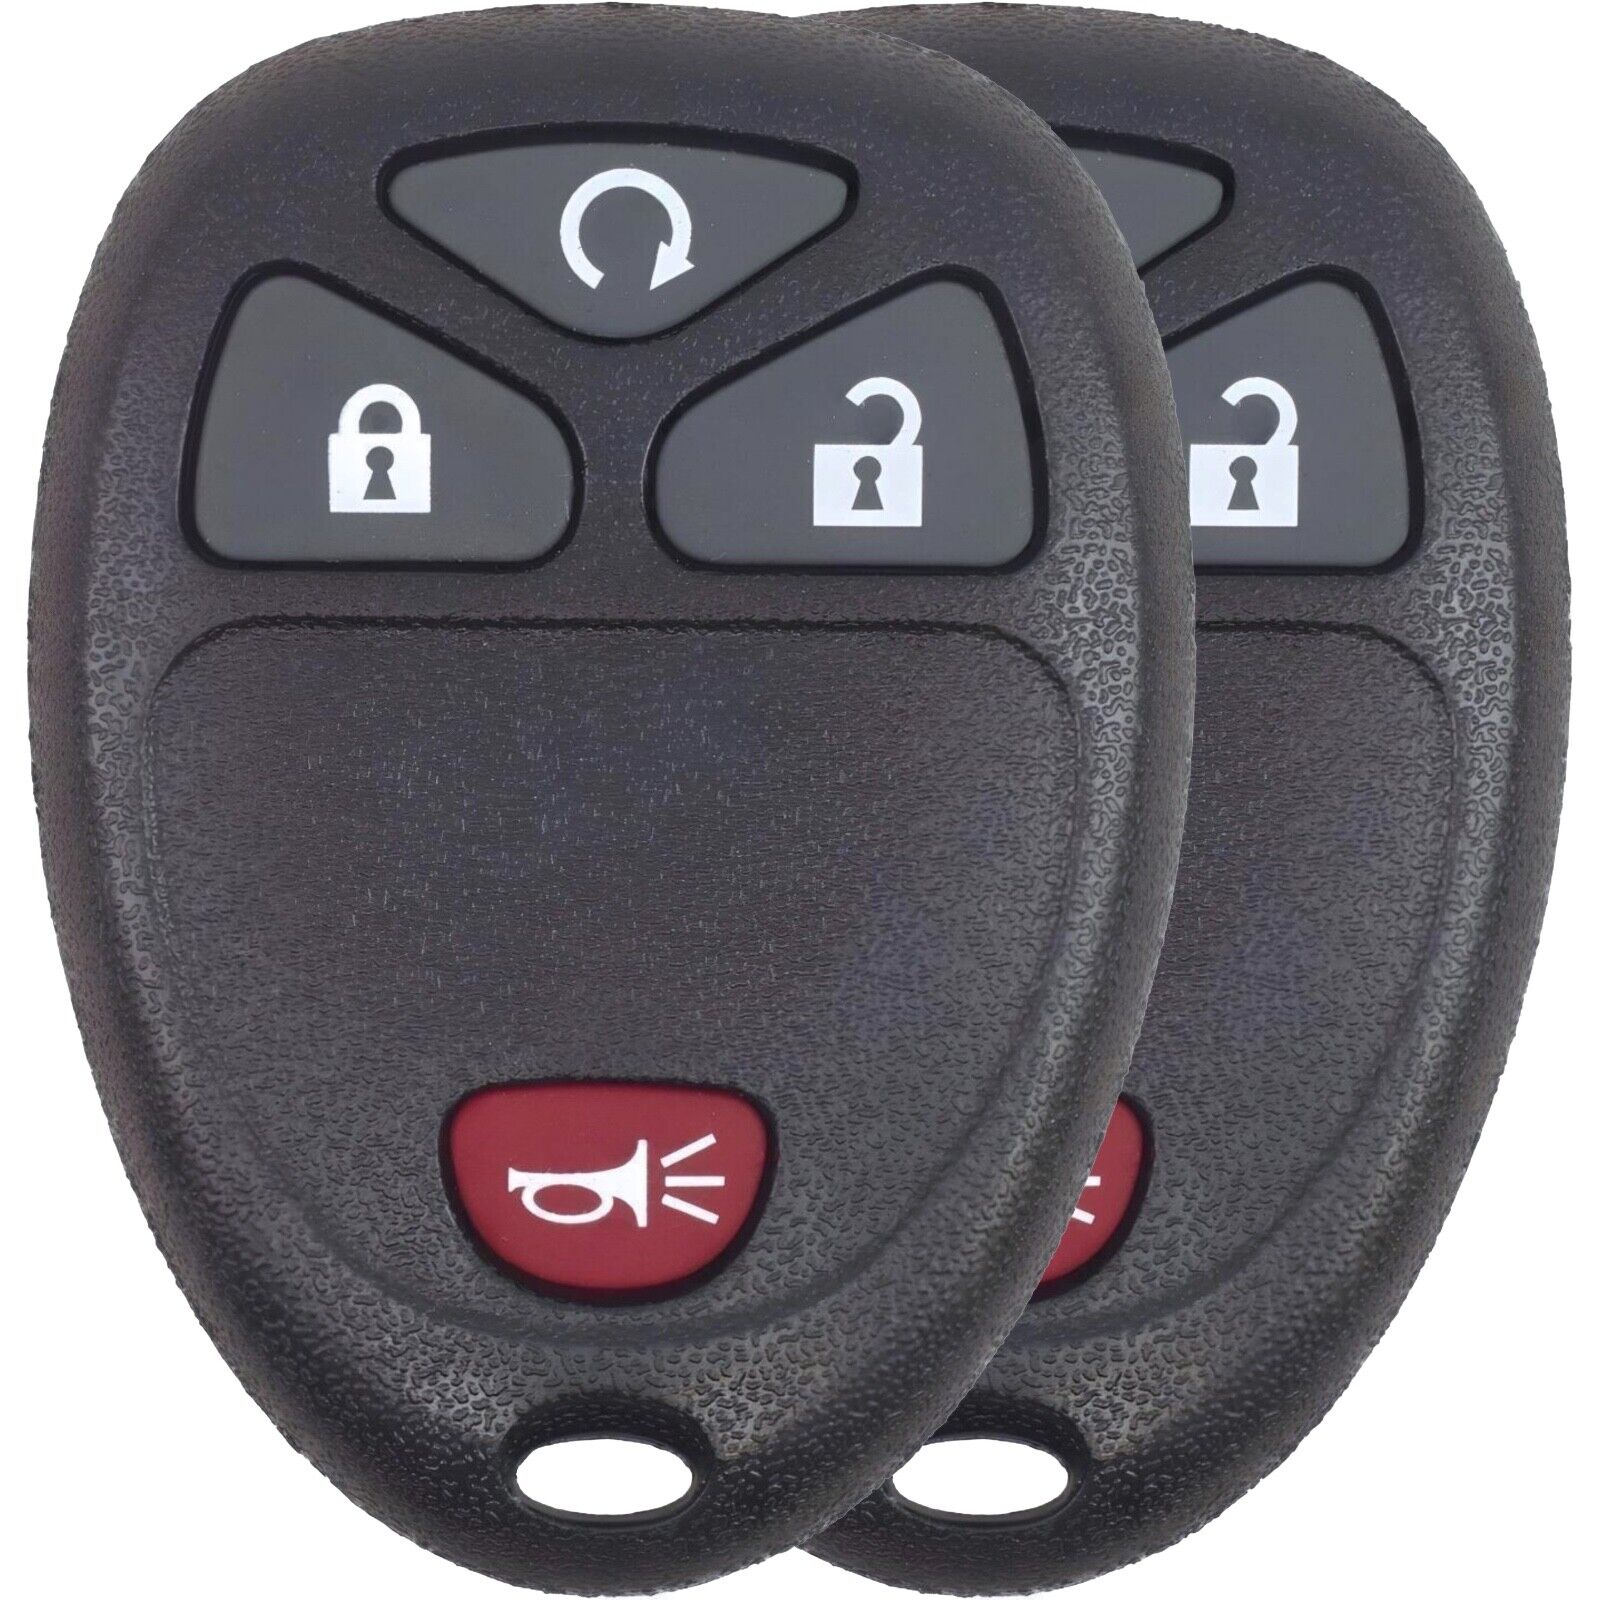 Key Fob Replacement For Chevy Buick Pontiac Saturn FCC ID: KOBGT04A